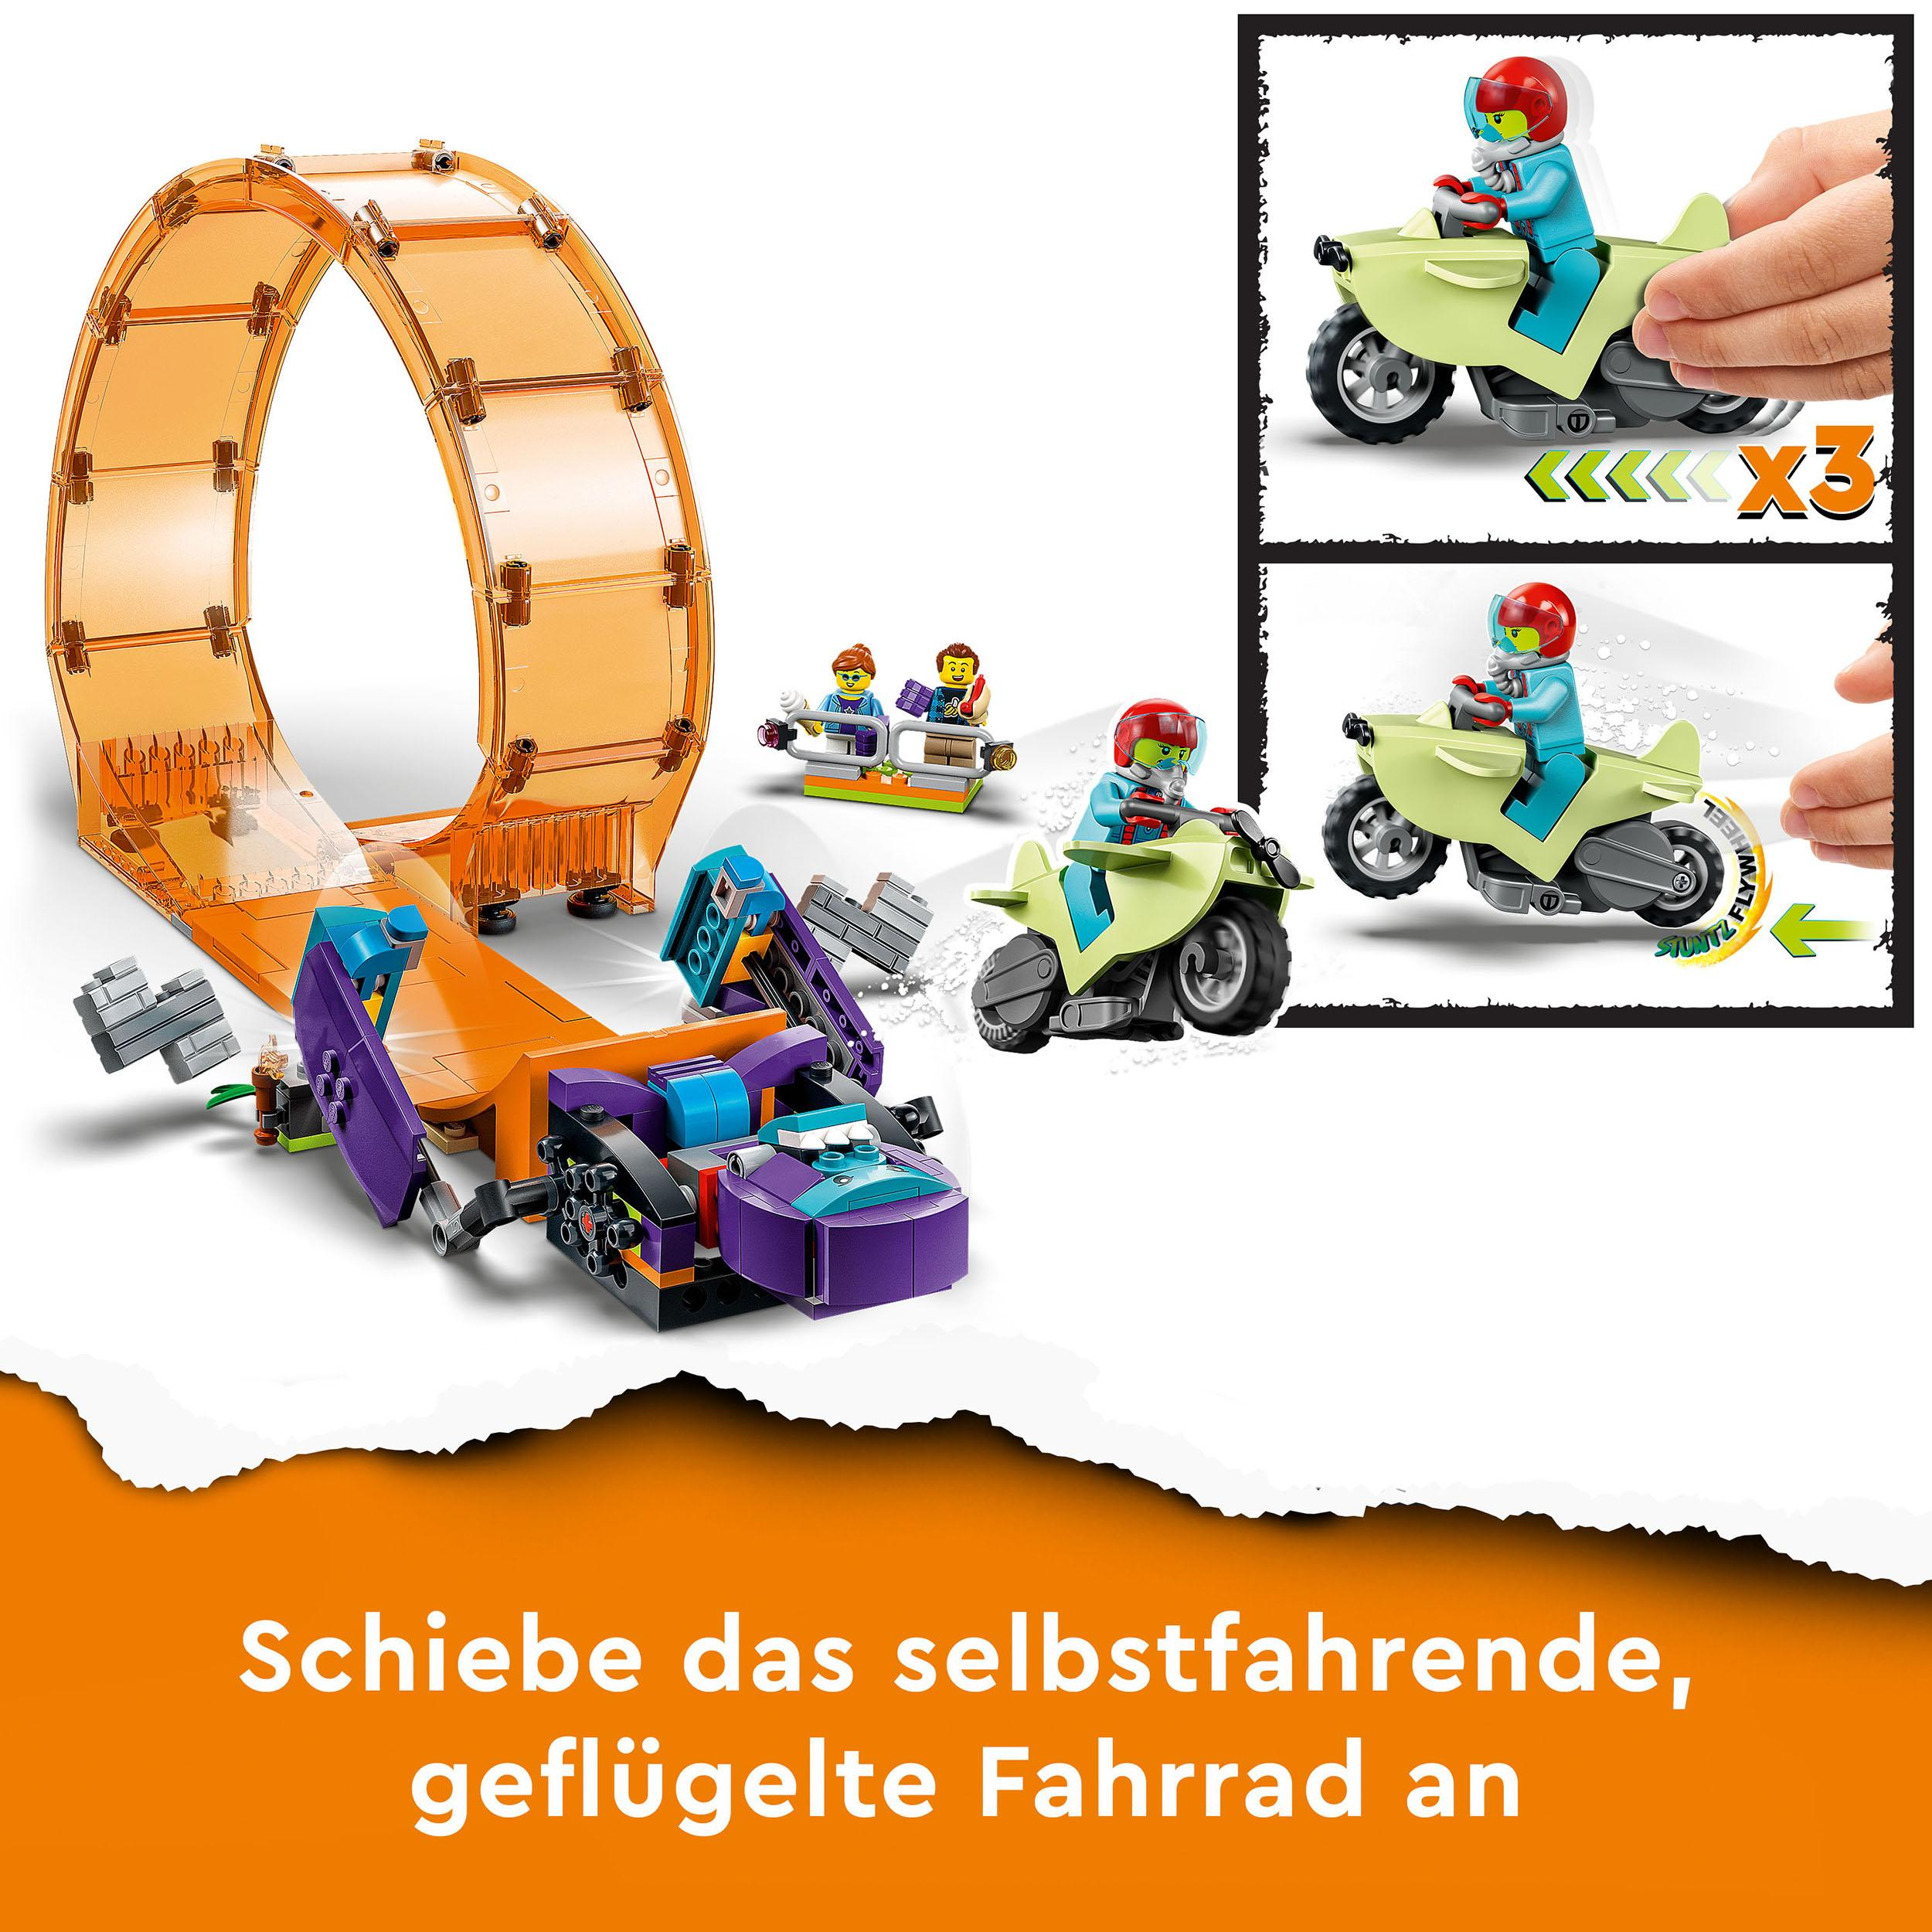 LEGO City Stuntz 60338 Schimpansen-Stuntlooping Bausatz, Mehrfarbig